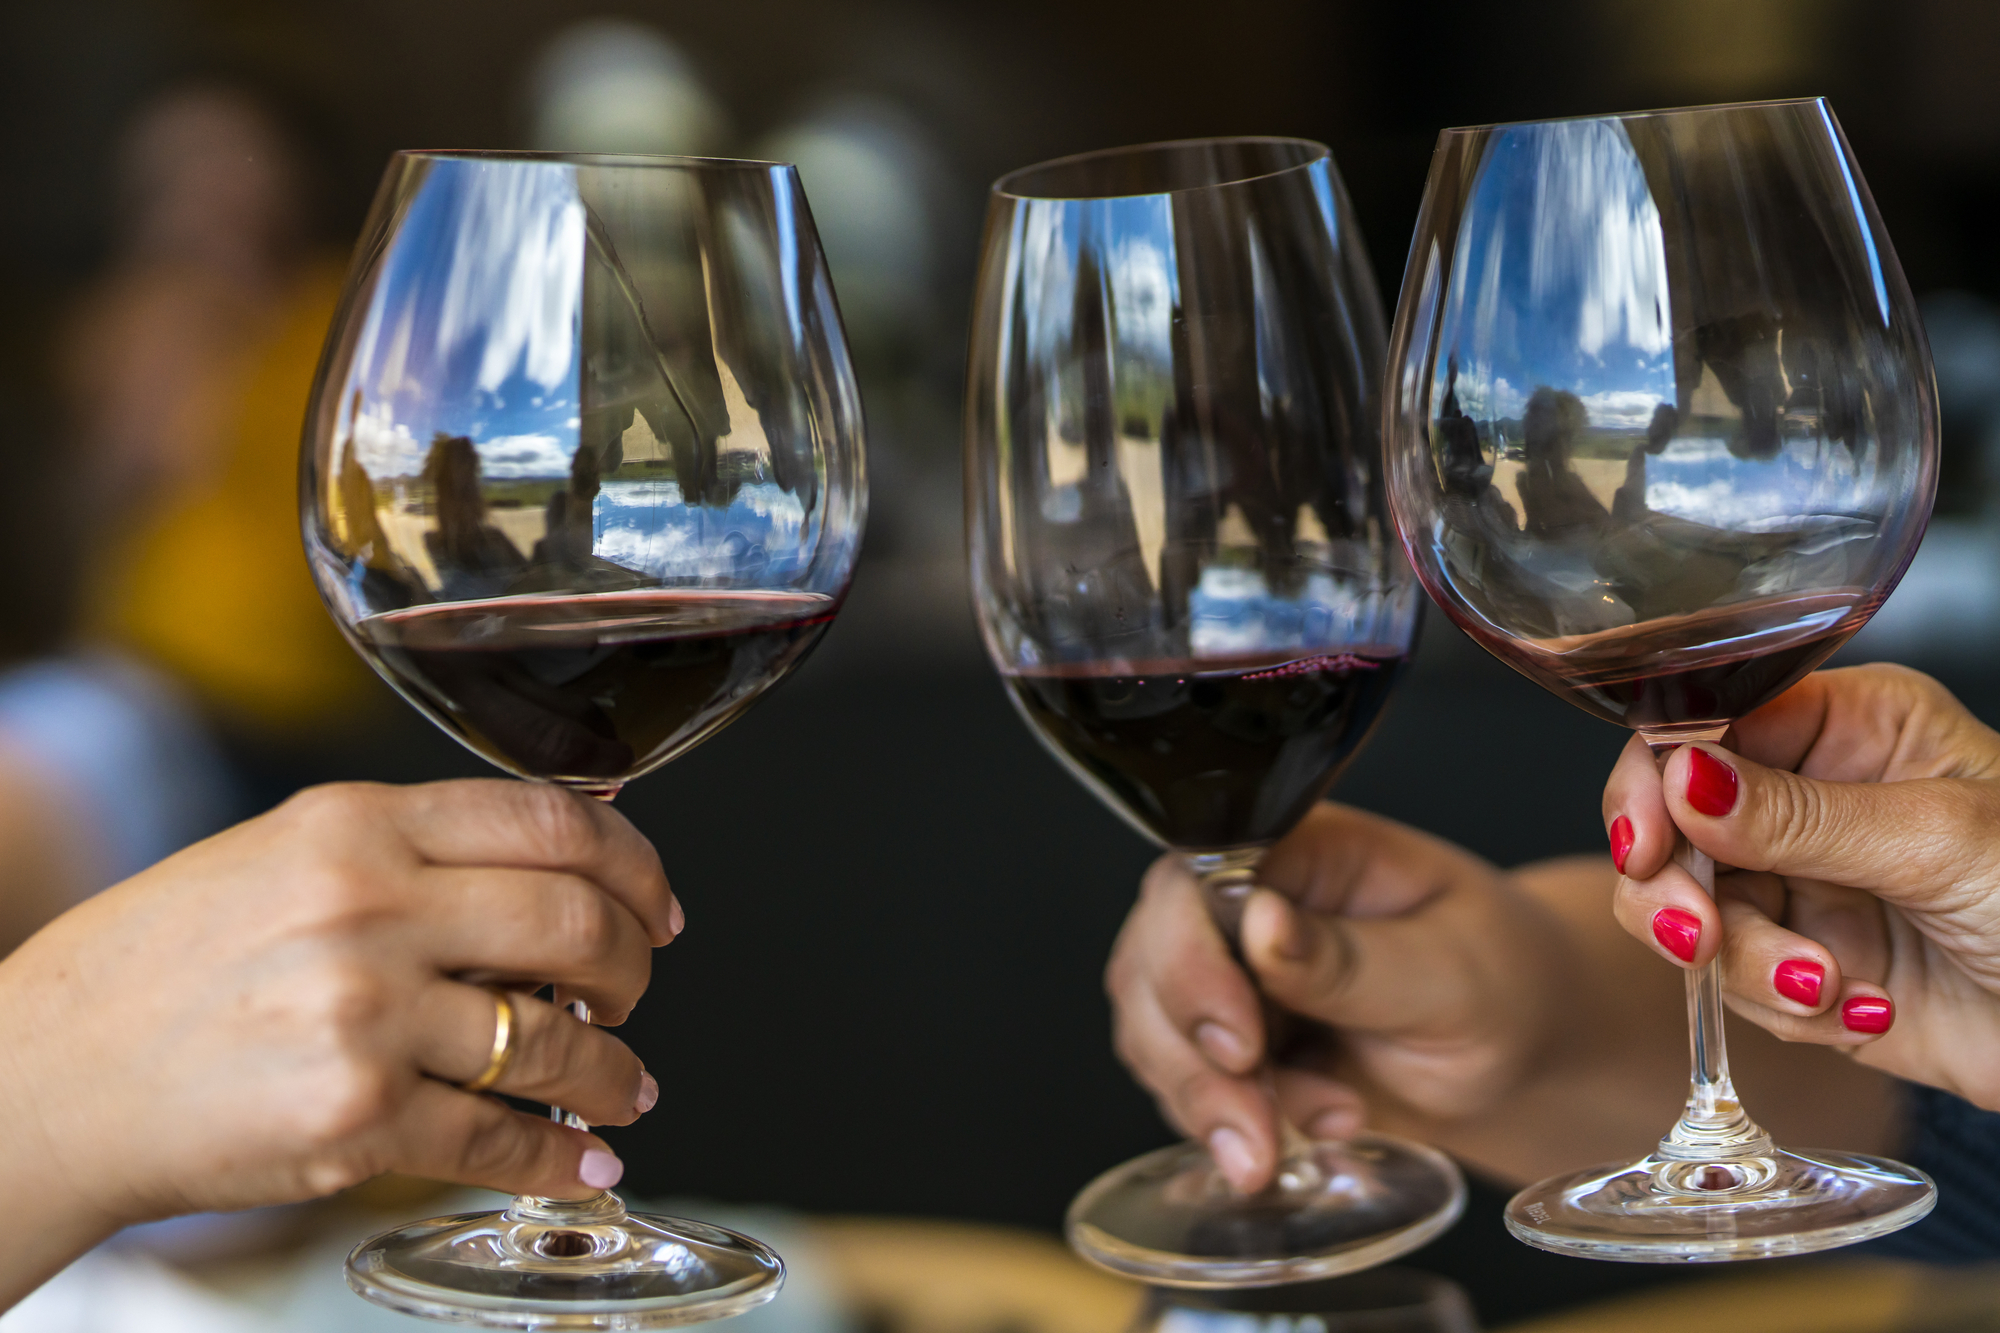 Sedona Wine Tours: Top 4 Wineries